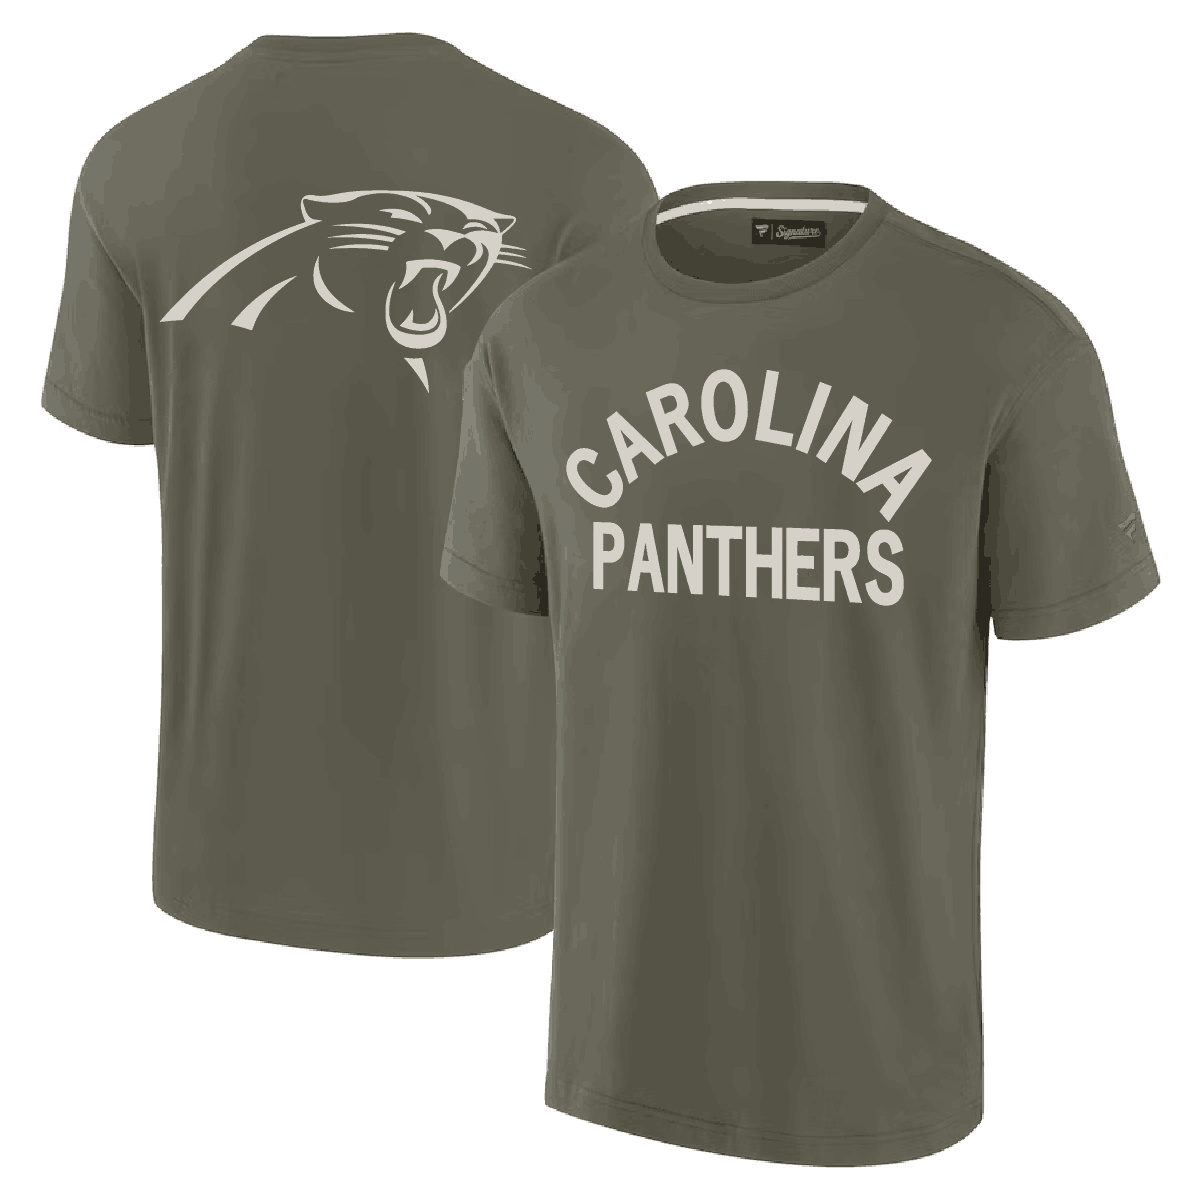 Men's Carolina Panthers Olive Elements Super Soft T-Shirt